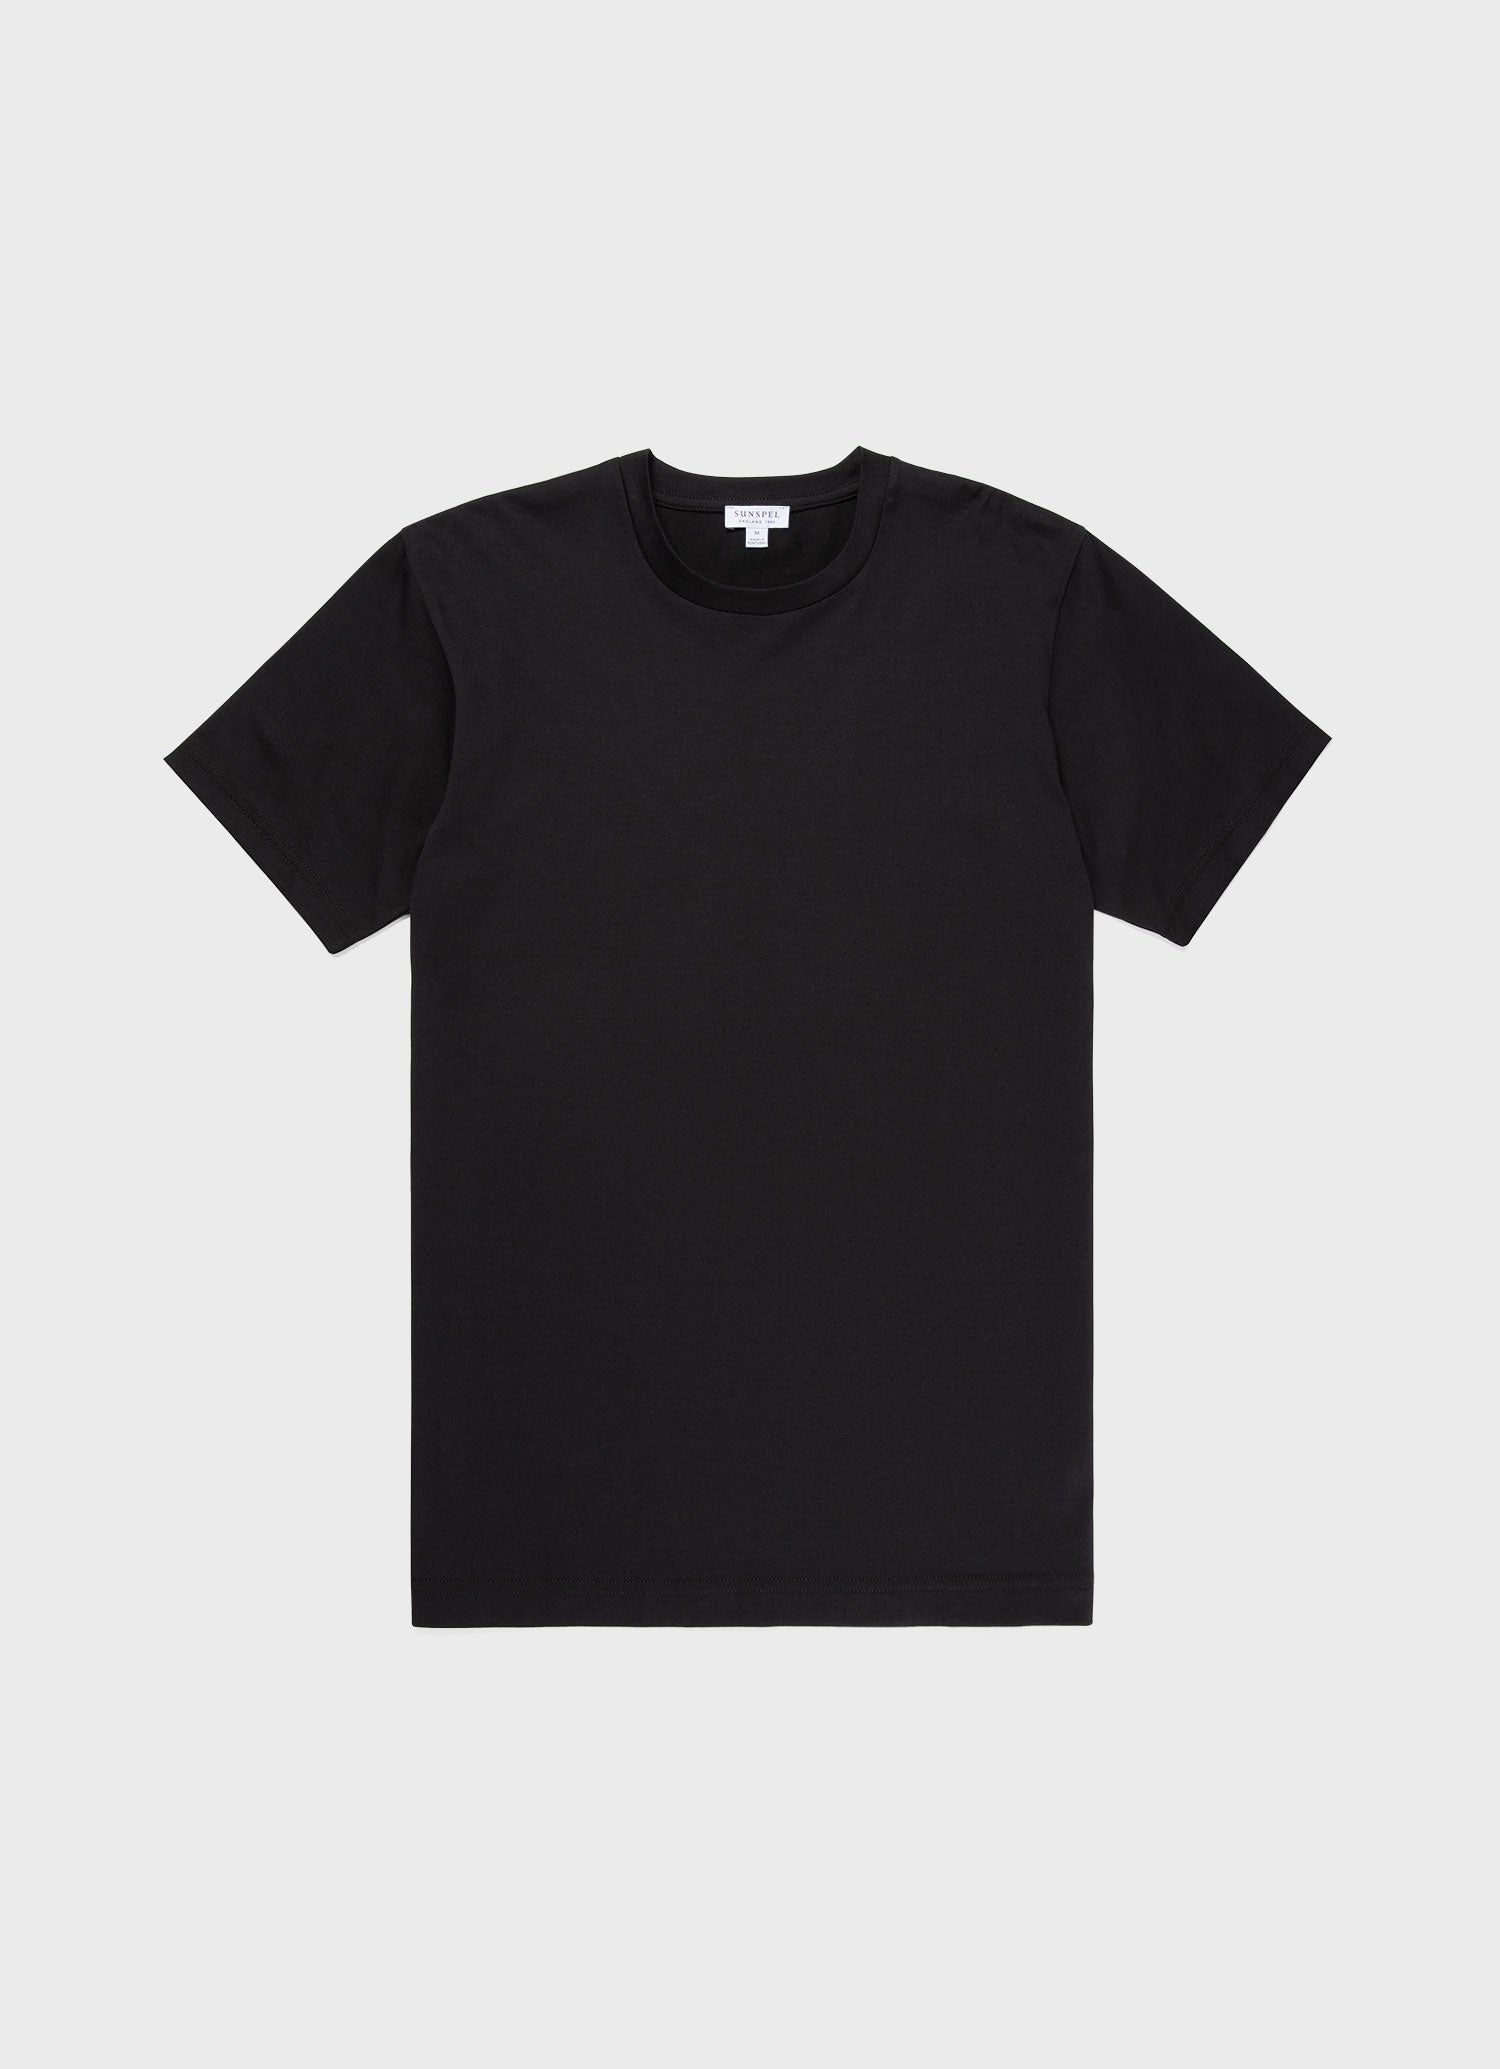 Men's Riviera Midweight T-shirt in Black | Sunspel